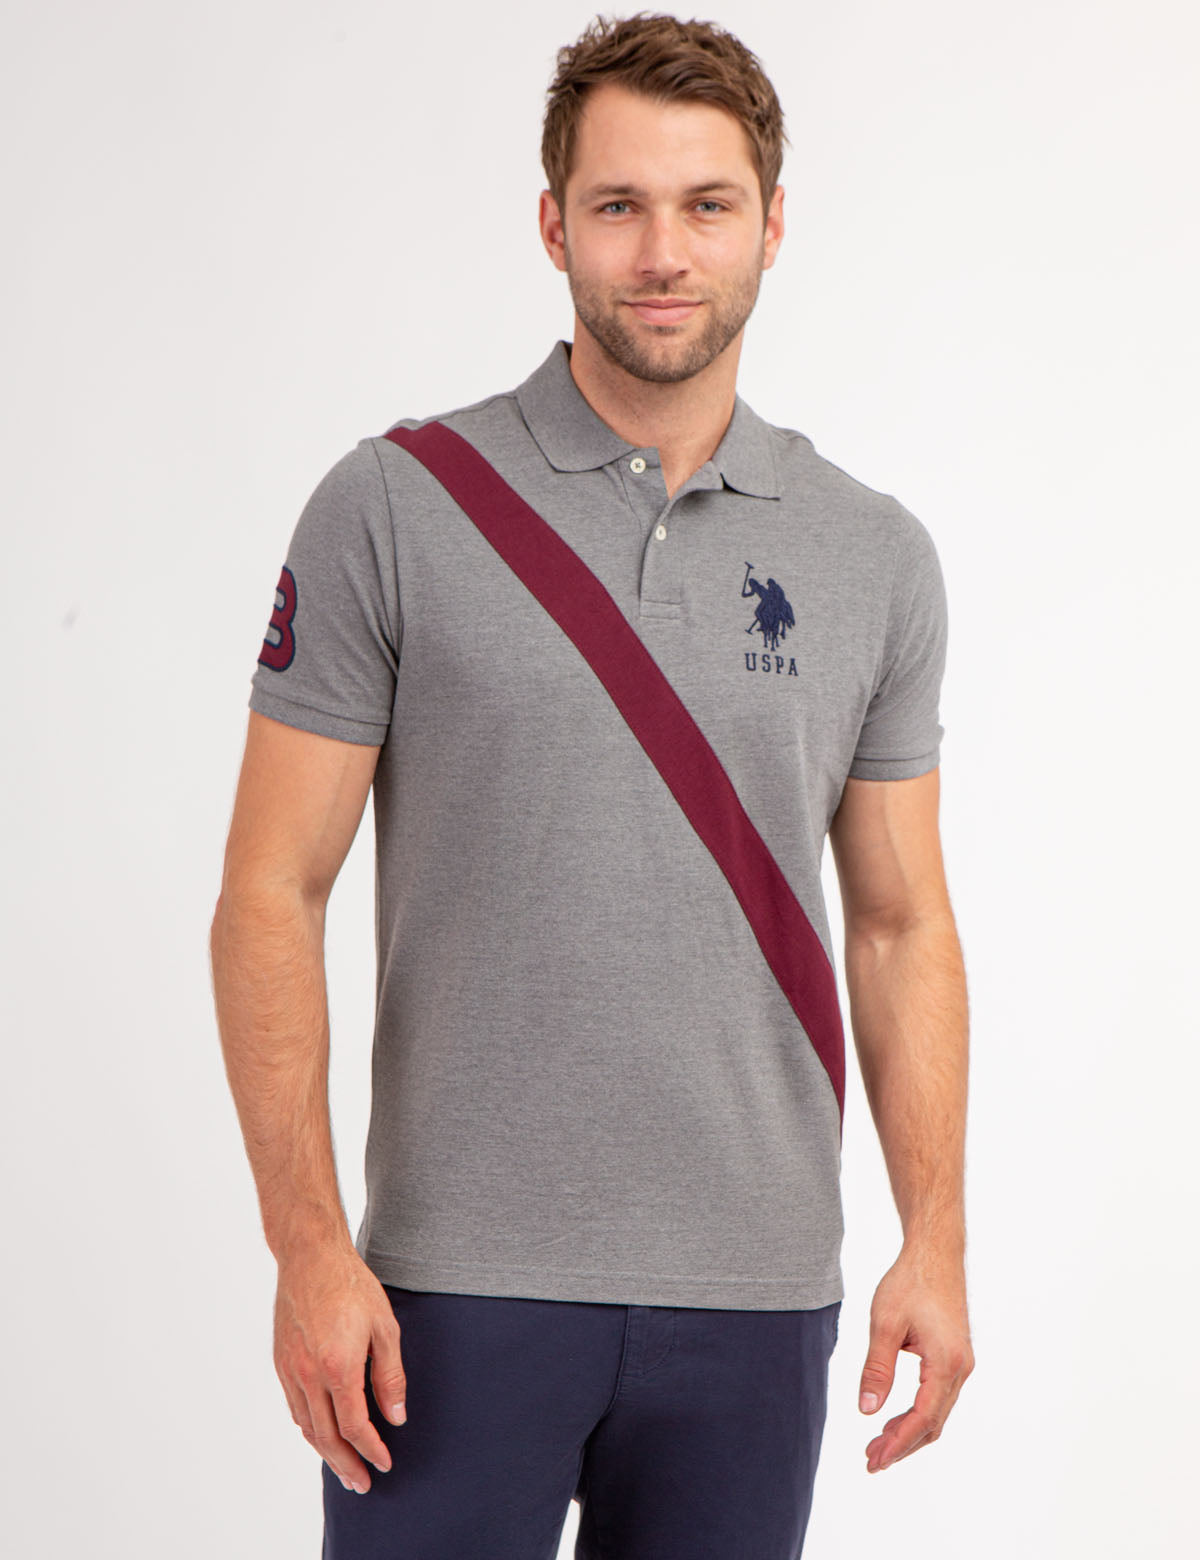 U.S. Polo Assn. Men's Ultimate Pique Polo Shirt, Size: Large, Blue